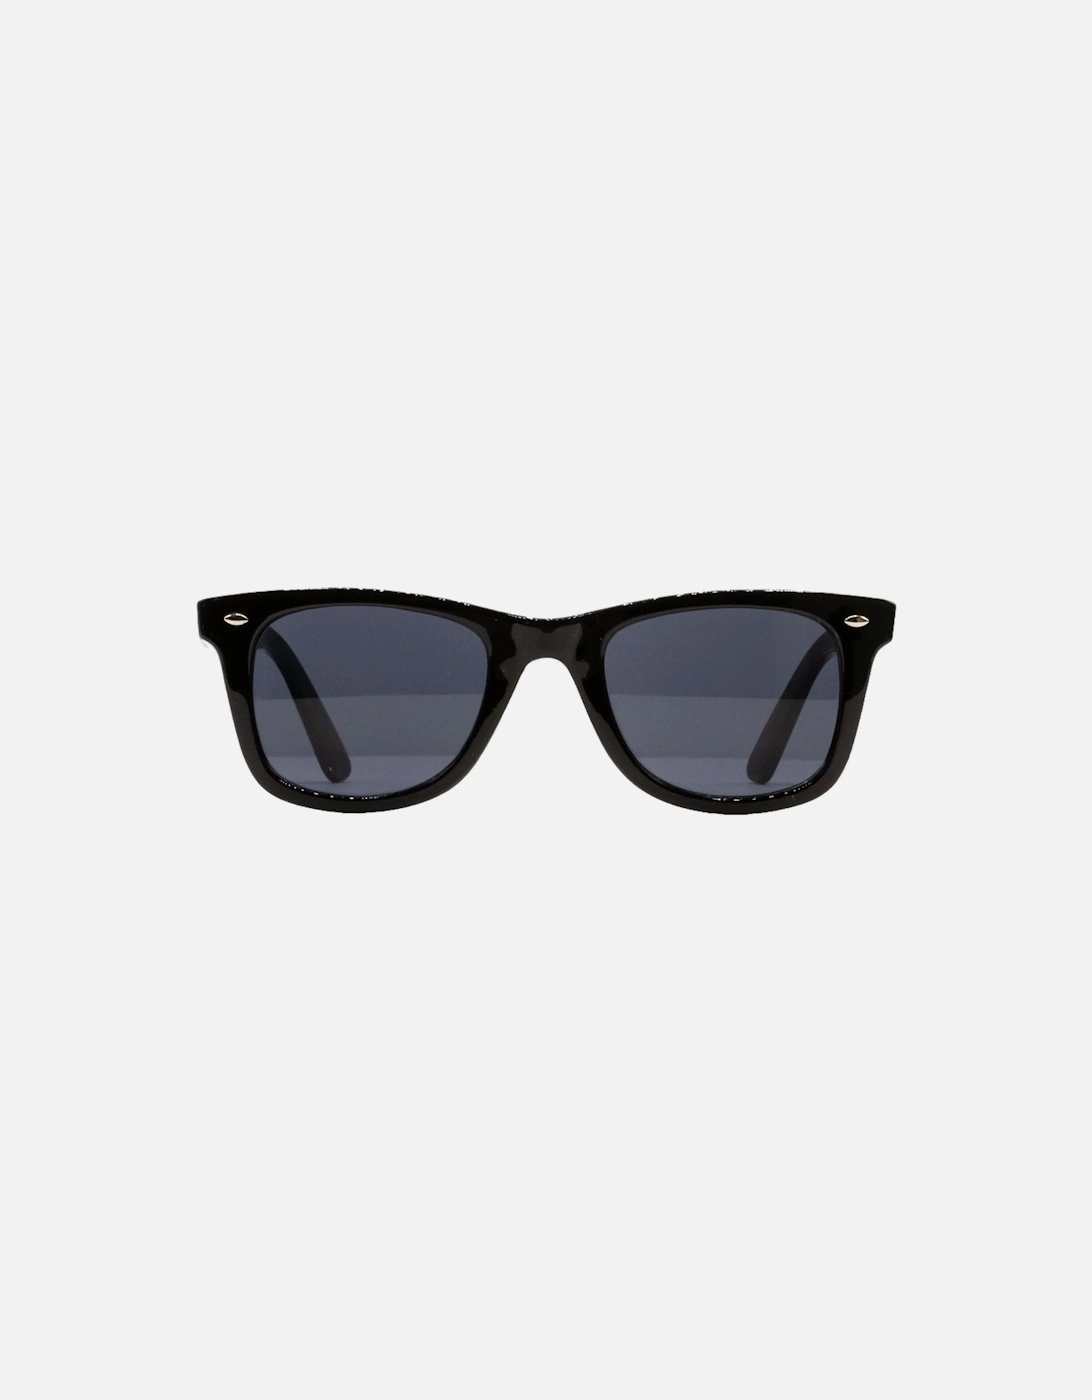 Noway Sunglasses - Black